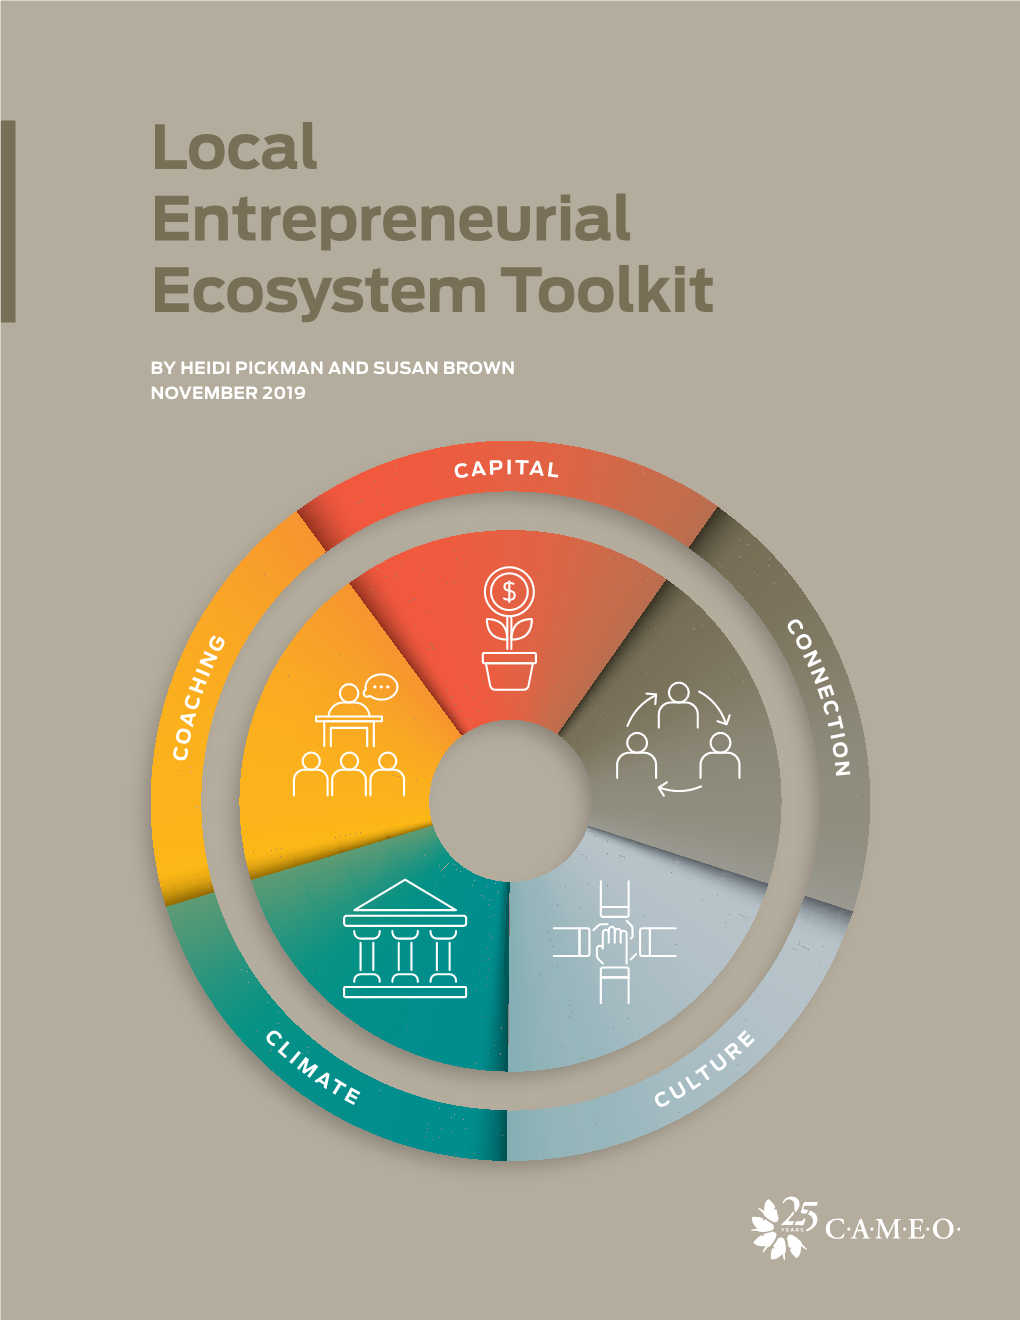 Local Entrepreneurial Ecosystem Toolkit